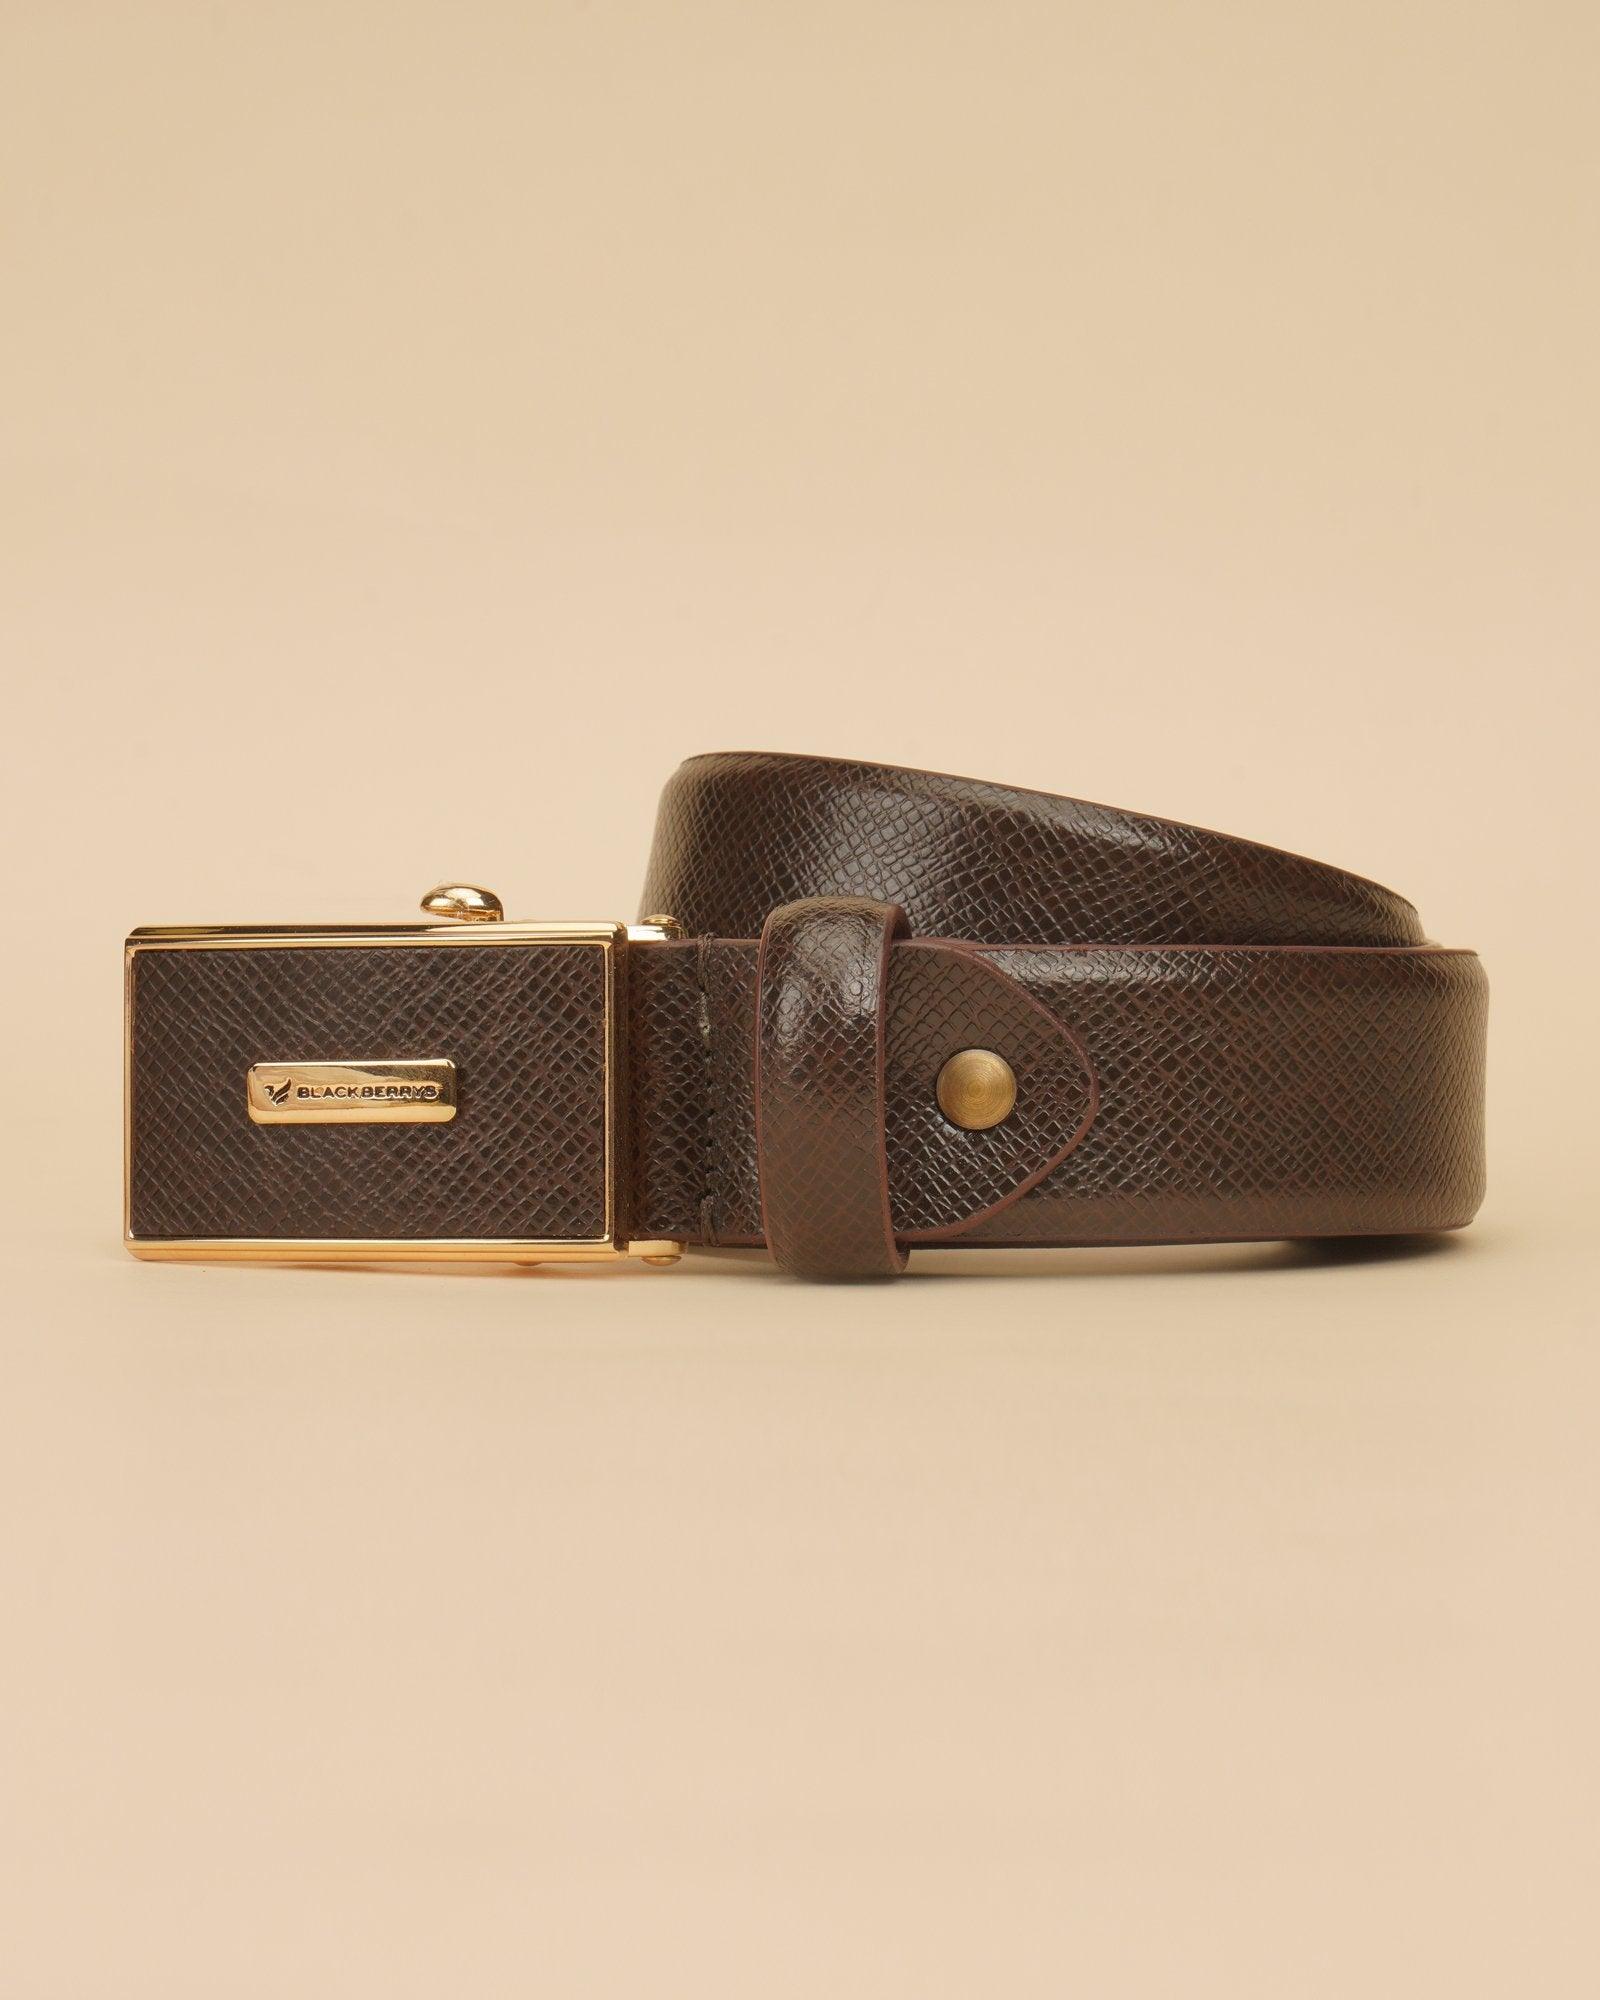 Auto-lock Men's Leather Belt, Black & Brown